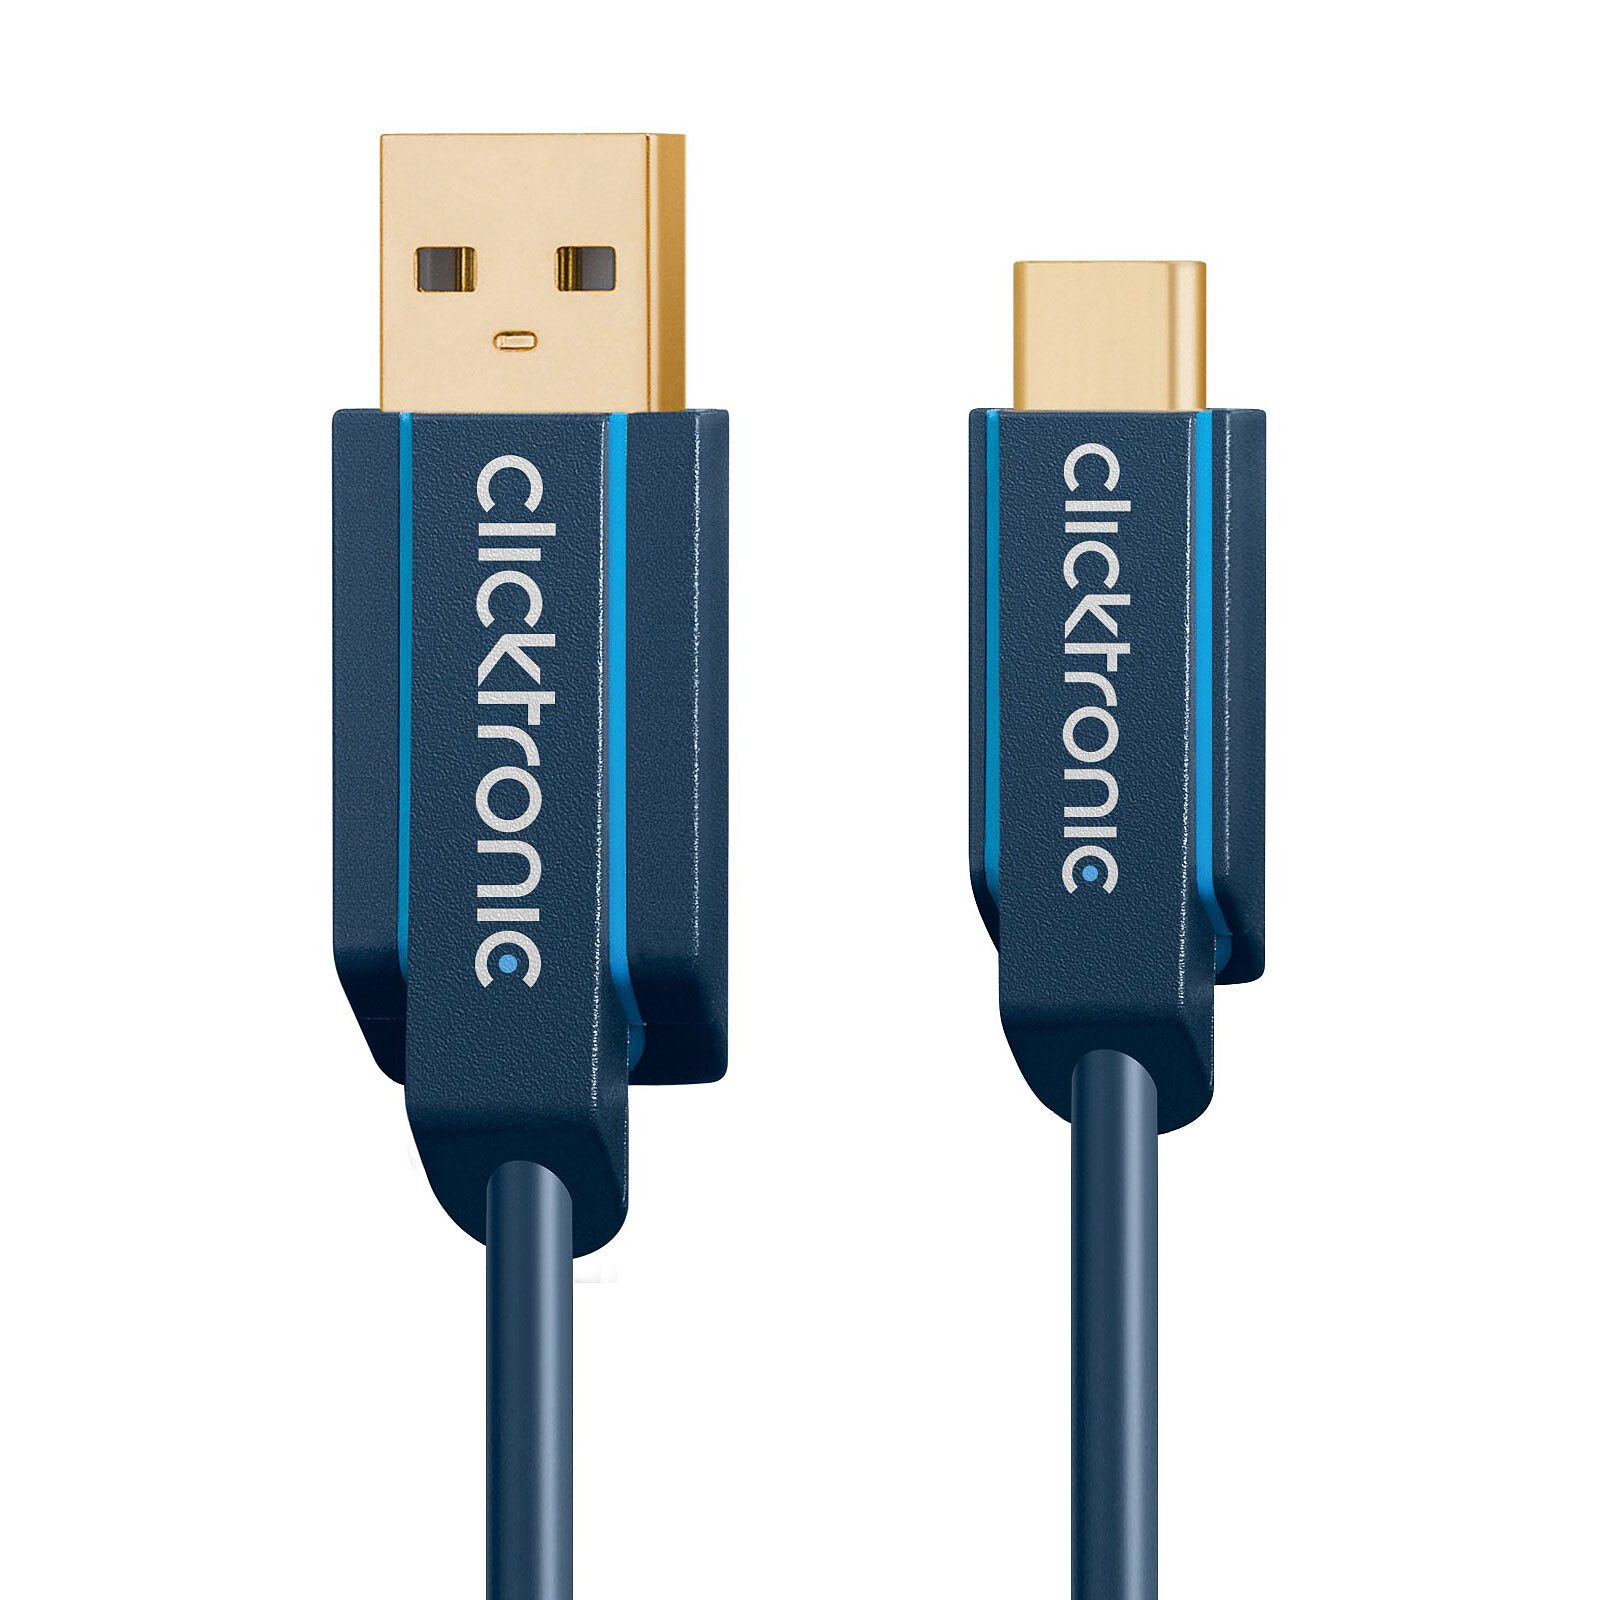 Câble Cordon Rallonge USB 3.0 Mâle à Femelle - 50cm Neuf - Usb 3 extension  Bleu